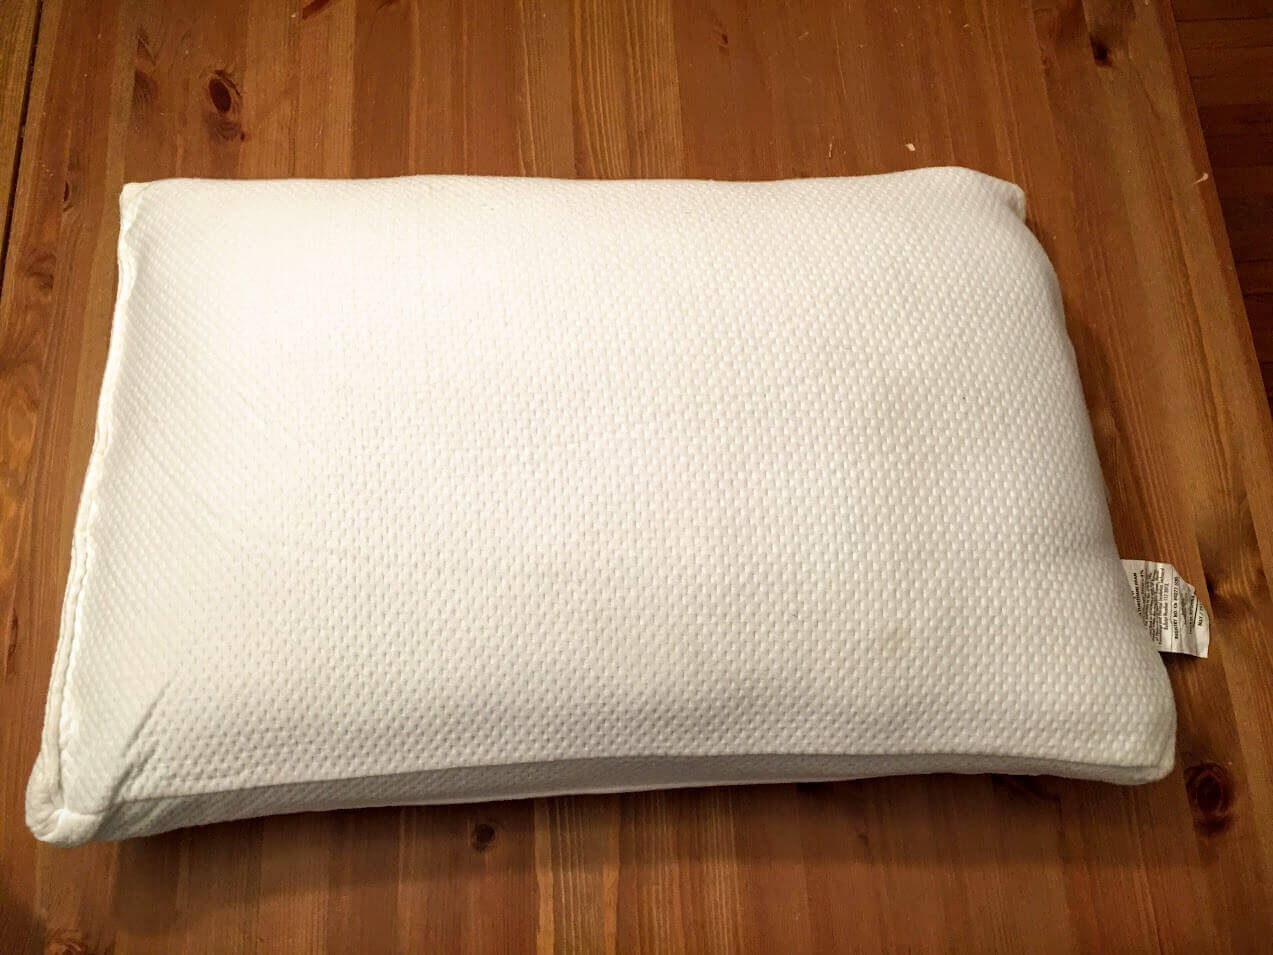 Joy Mangano Pillow Review 2